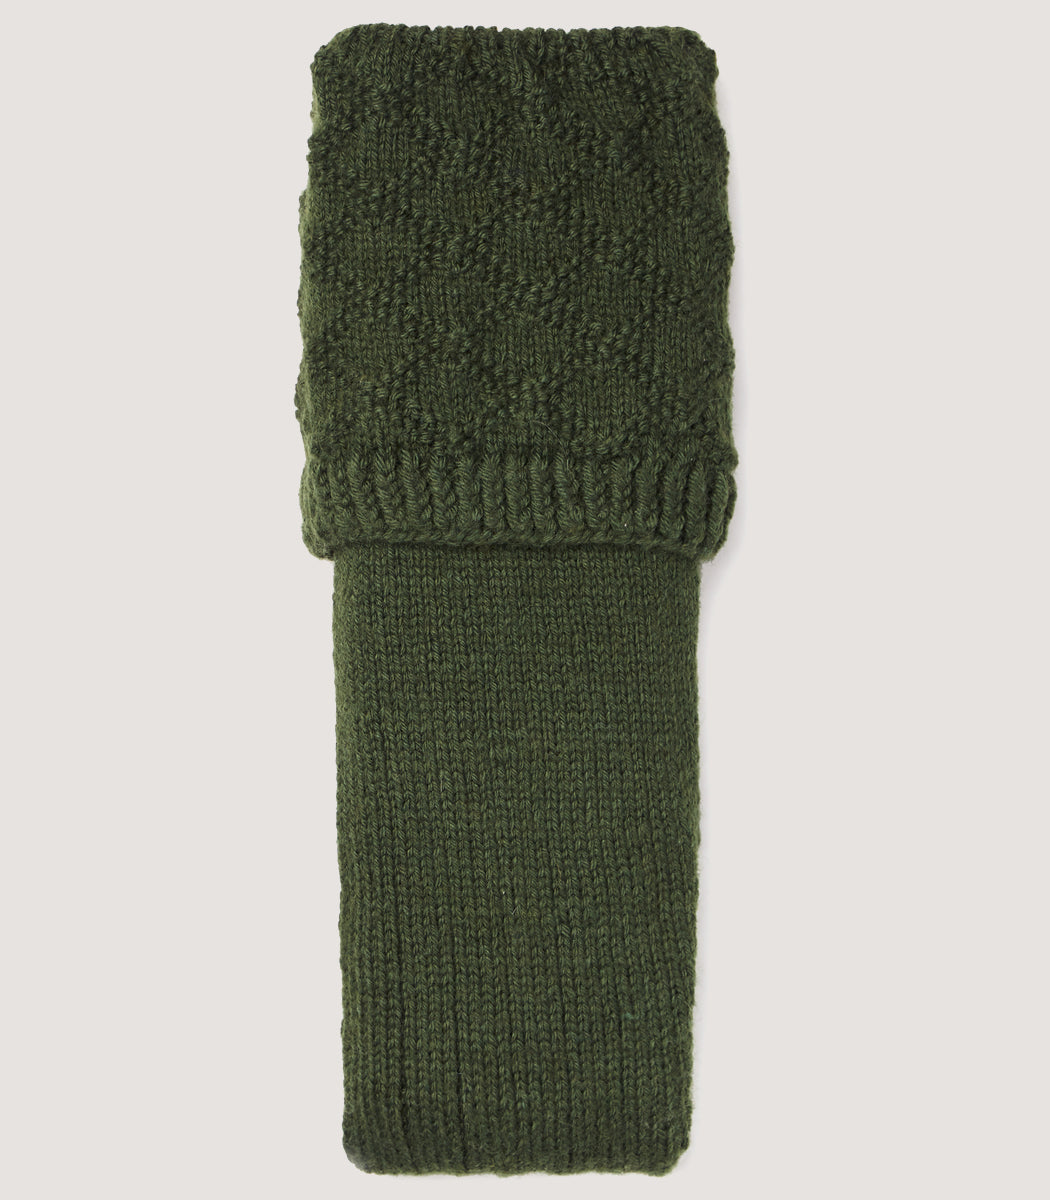 Caythorpe Handknitted Sock In Bottle Green